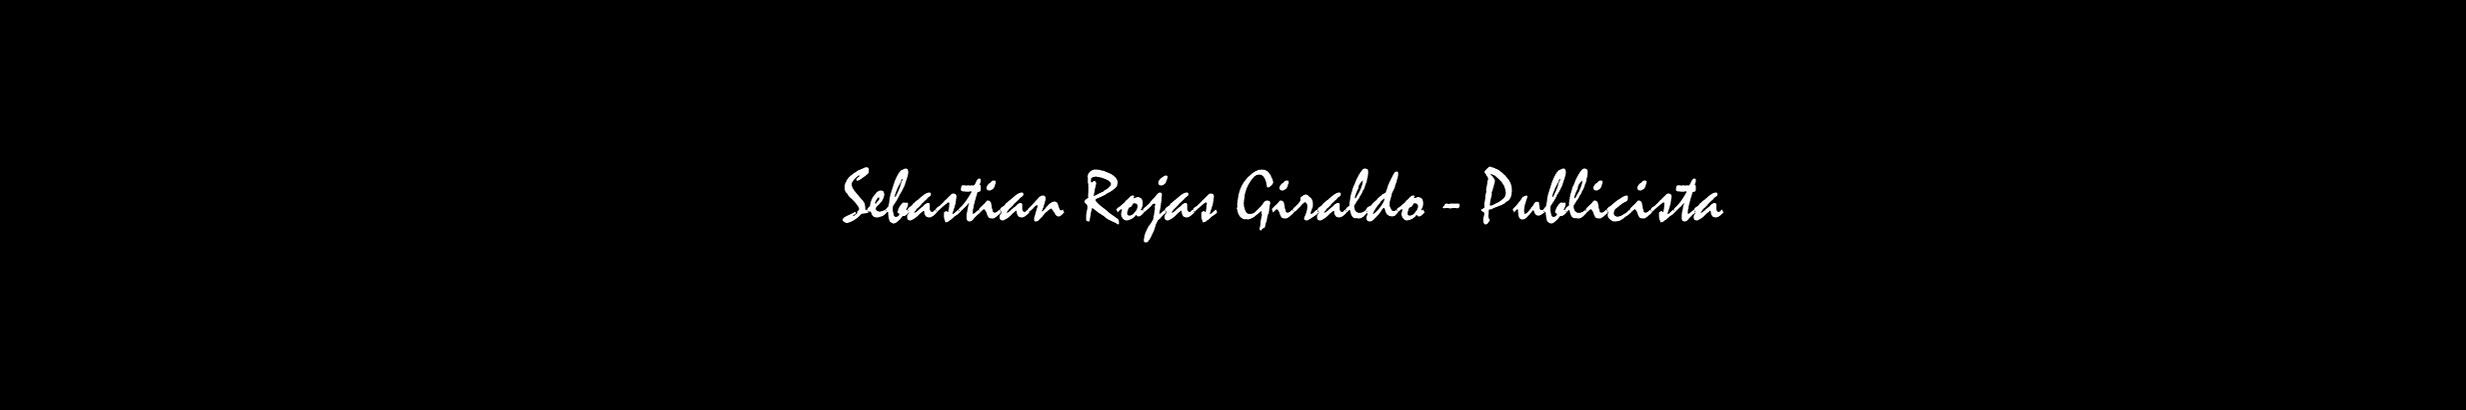 Sebastian Rojas Giraldo's profile banner